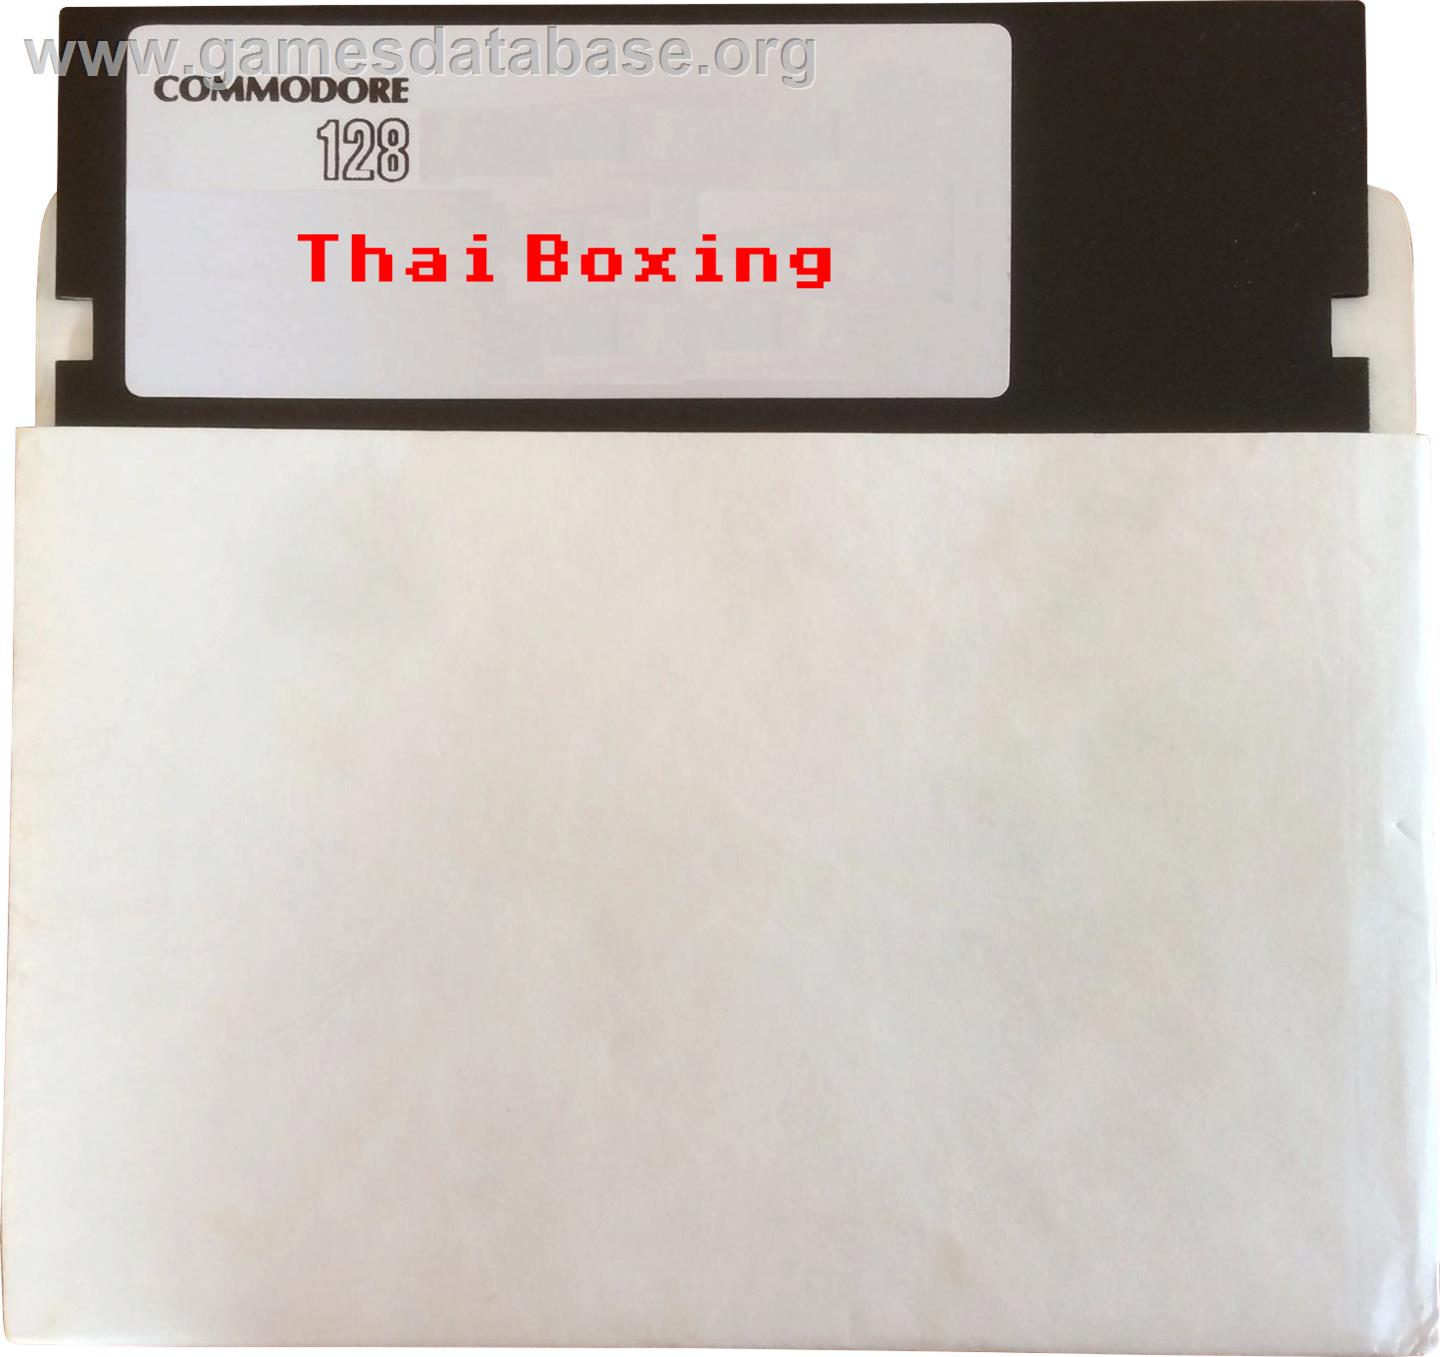 Thai Boxing - Commodore 128 - Artwork - Disc